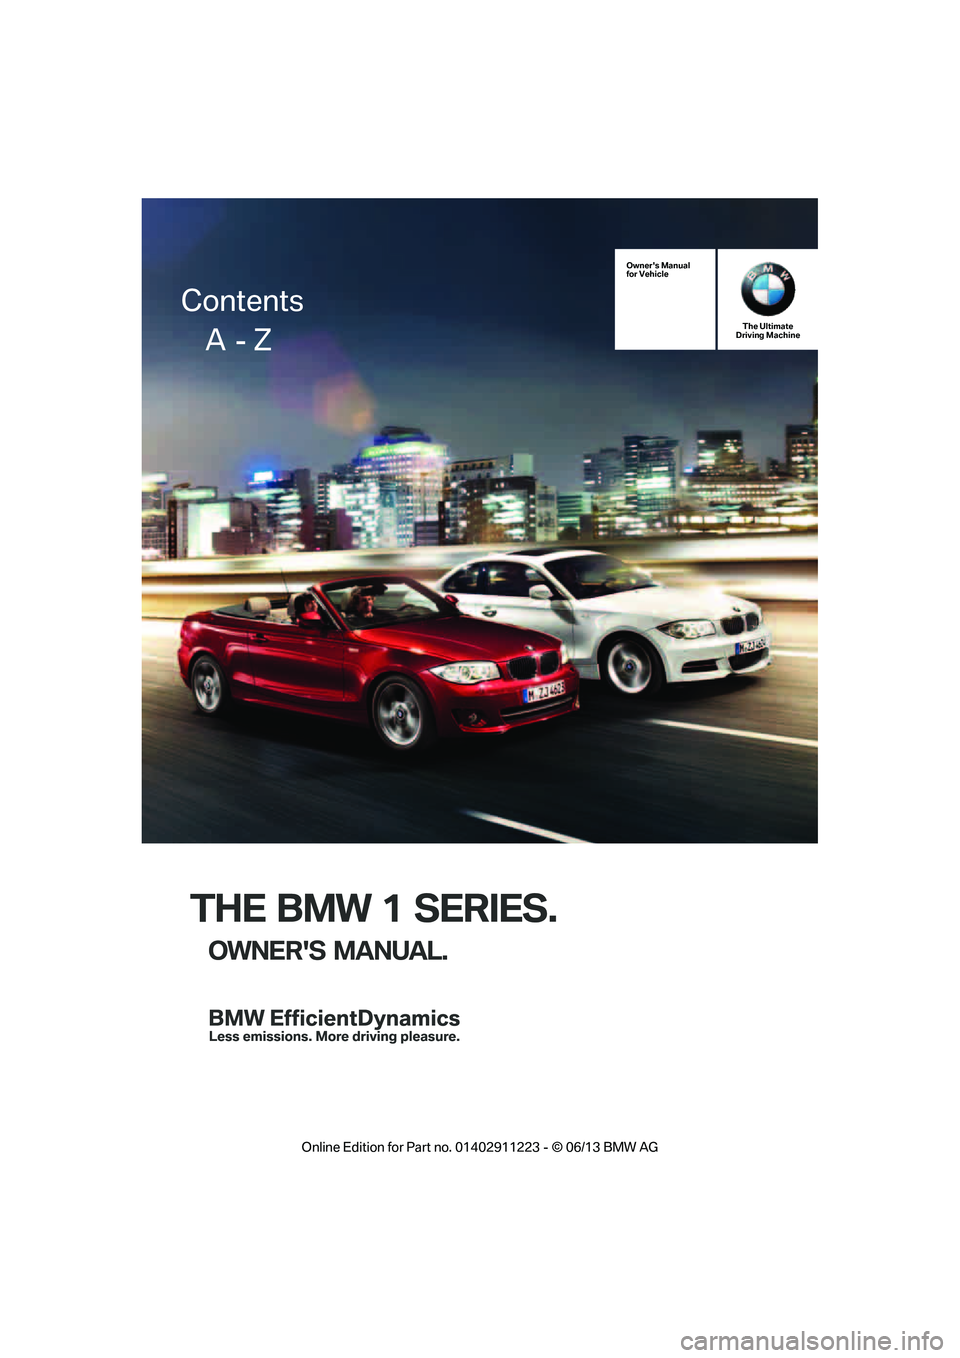 BMW 135I COUPE 2013  Owners Manual THE BMW 1 SERIES.
OWNERS MANUAL.
Owners Manual
for VehicleThe Ultimate
Driving Machine
Contents
     A  - Z

�2�Q�O�L�Q�H �(�G�L�W�L�R�Q �I�R�U �3�D�U�W �Q�R� ����������� � �